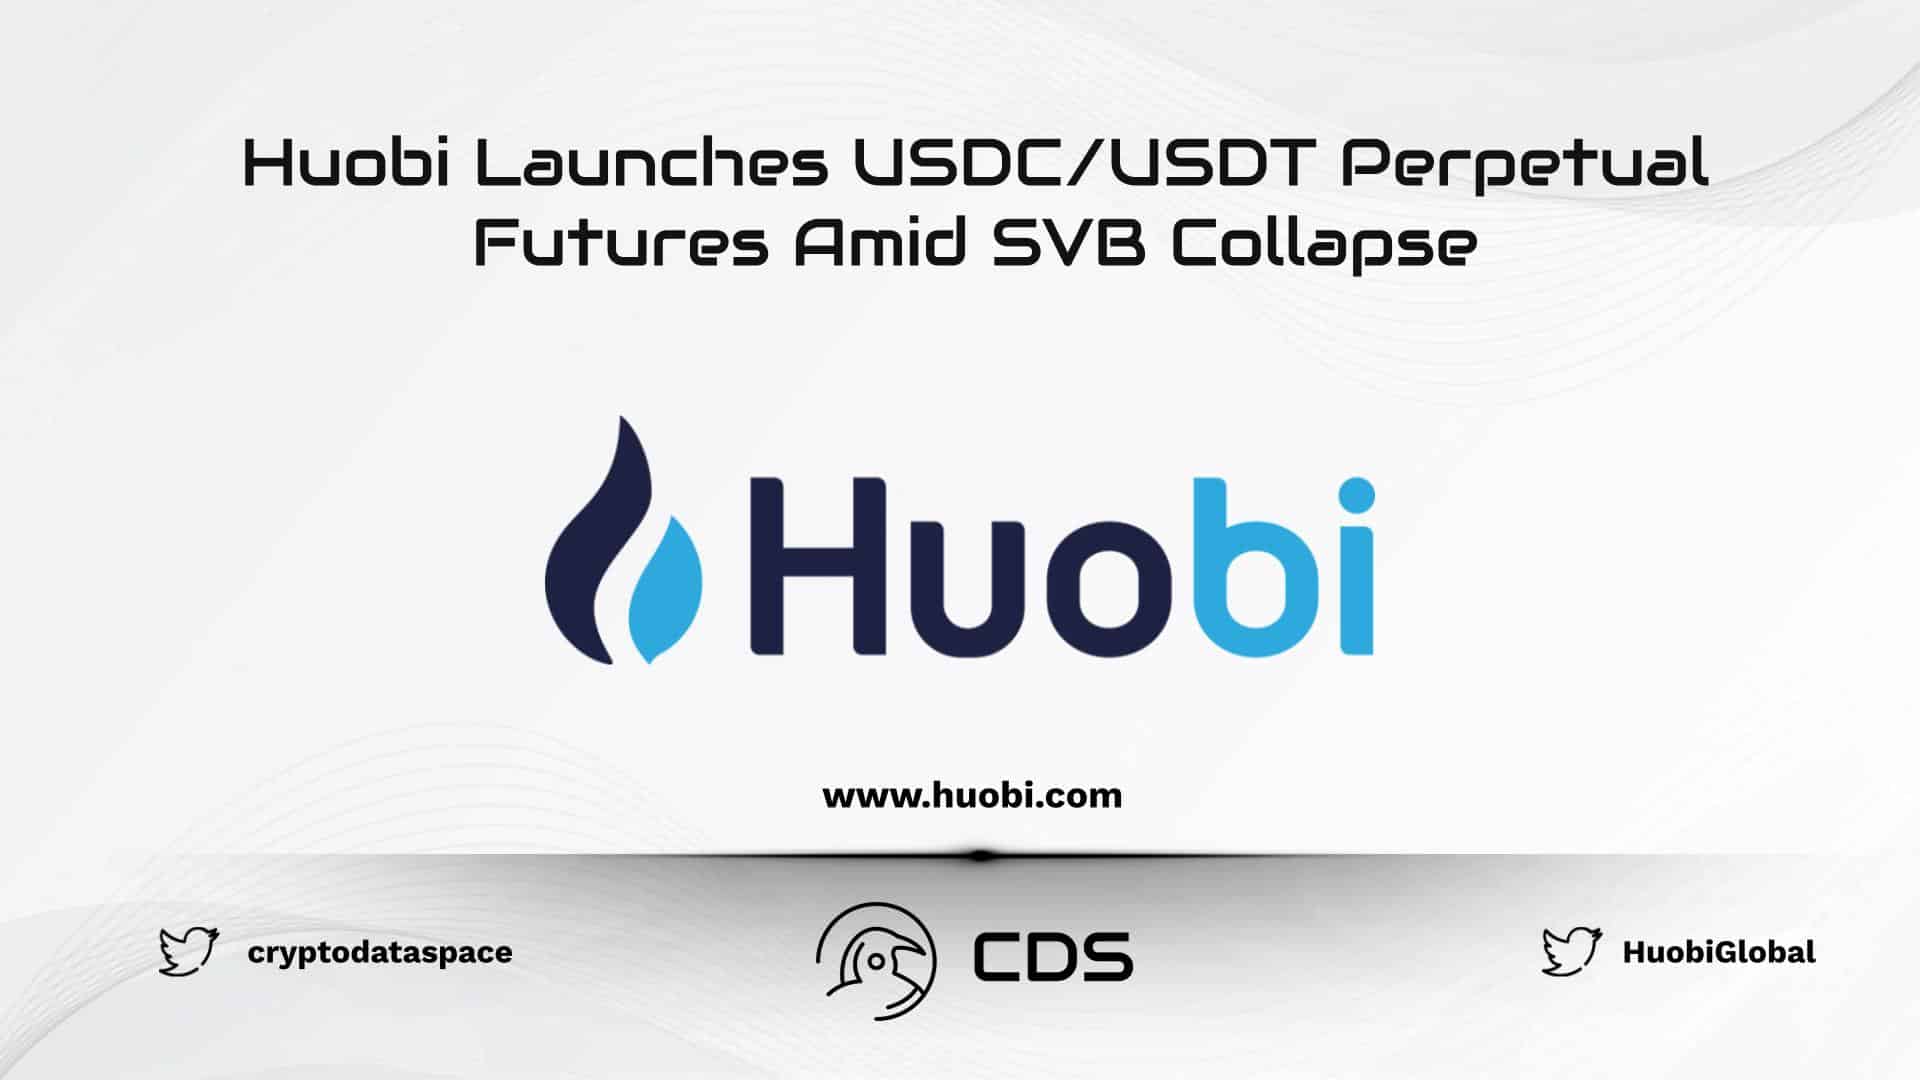 Huobi Launches USDC/USDT Perpetual Futures Amid SVB Collapse